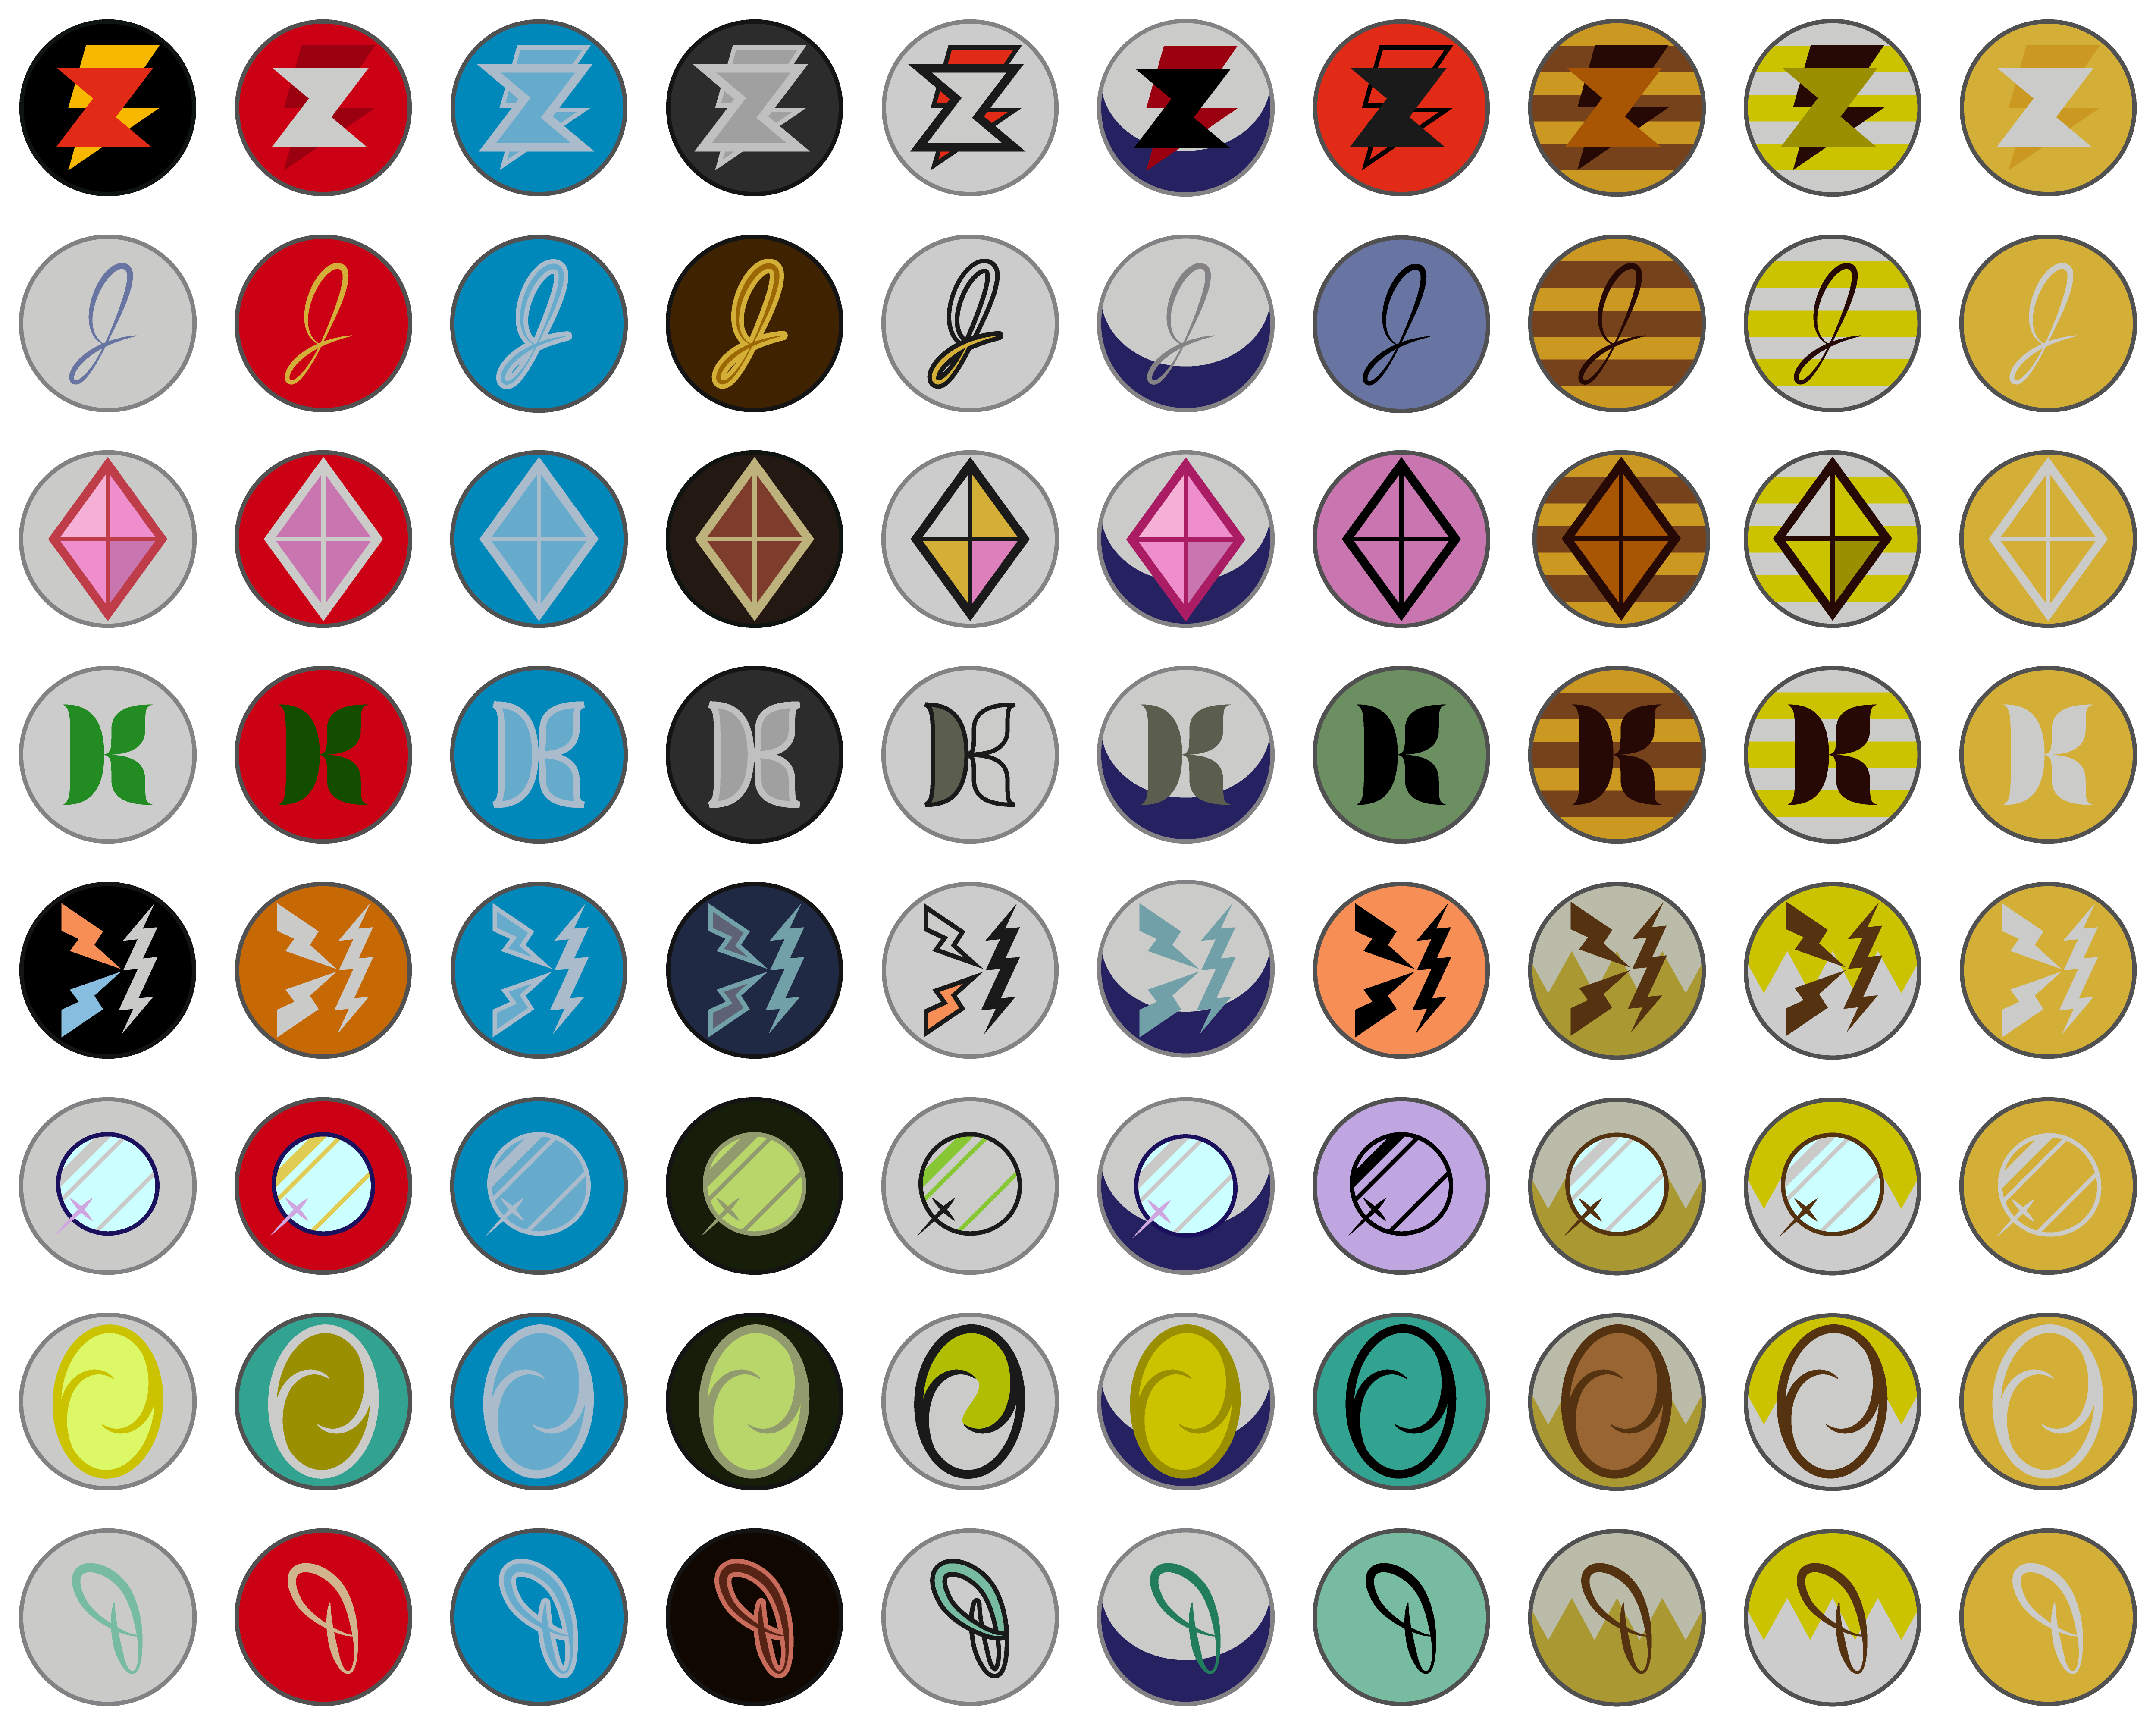 ZJ-Bros-all-emblems.png